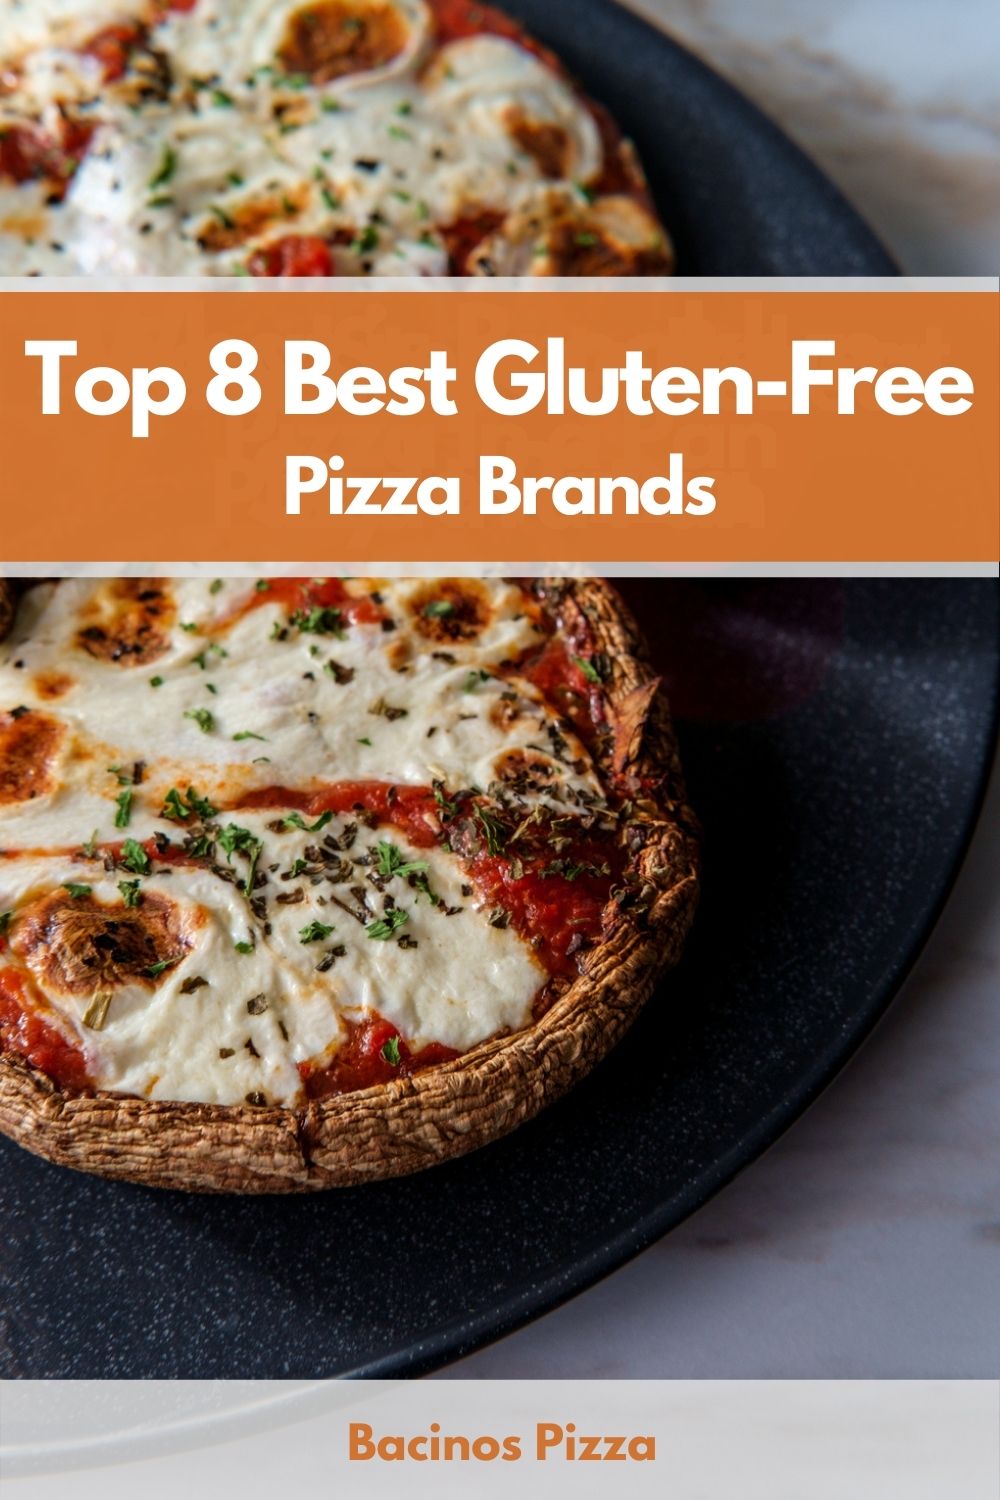 Top 8 Best Gluten-Free Pizza Brands pin 2